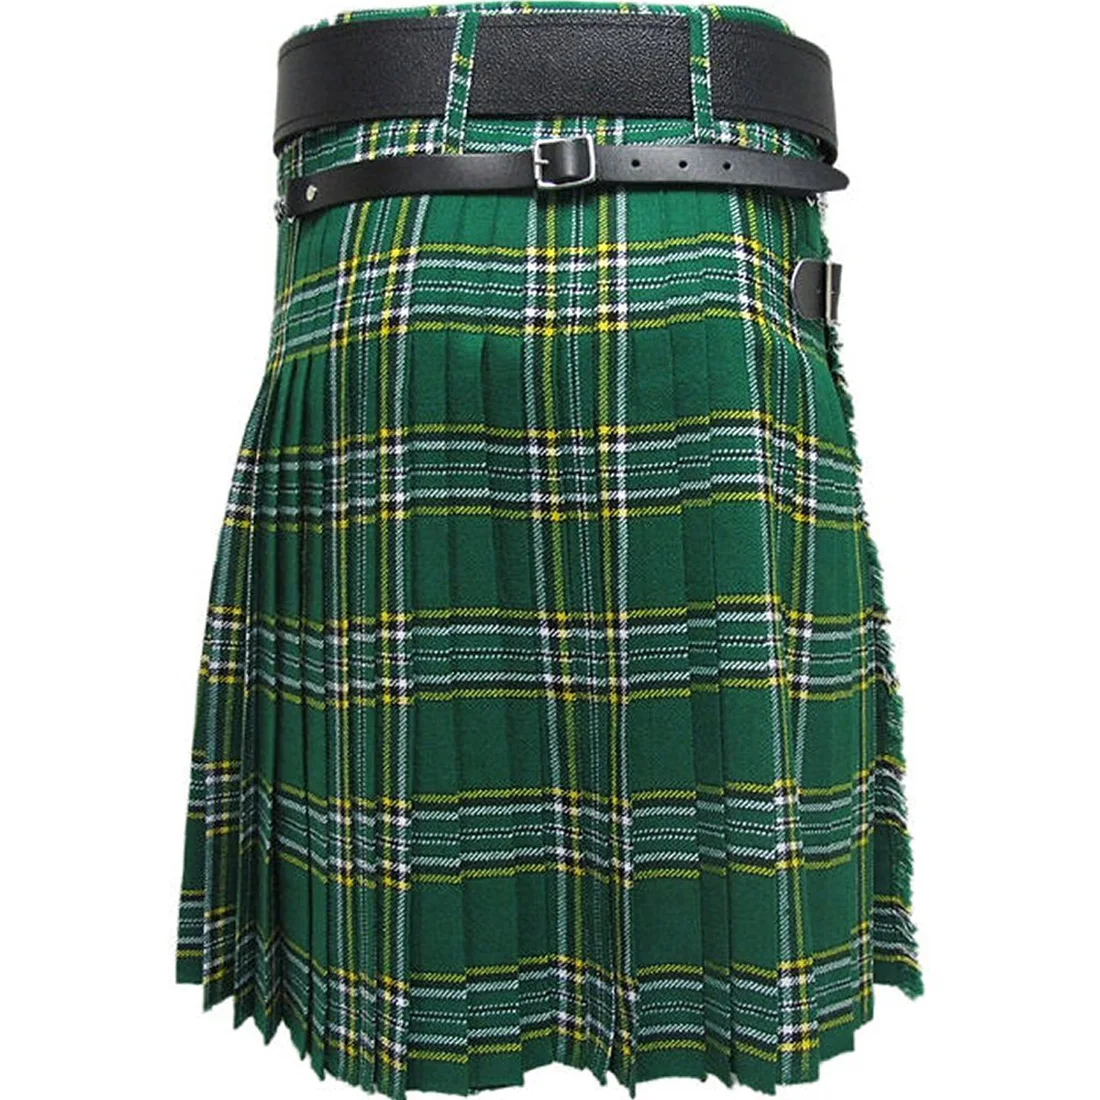 New arrival Men Stylish Scotland Scottish National Tartan Utility Kilt Skirt made in Pakistan on whole sale